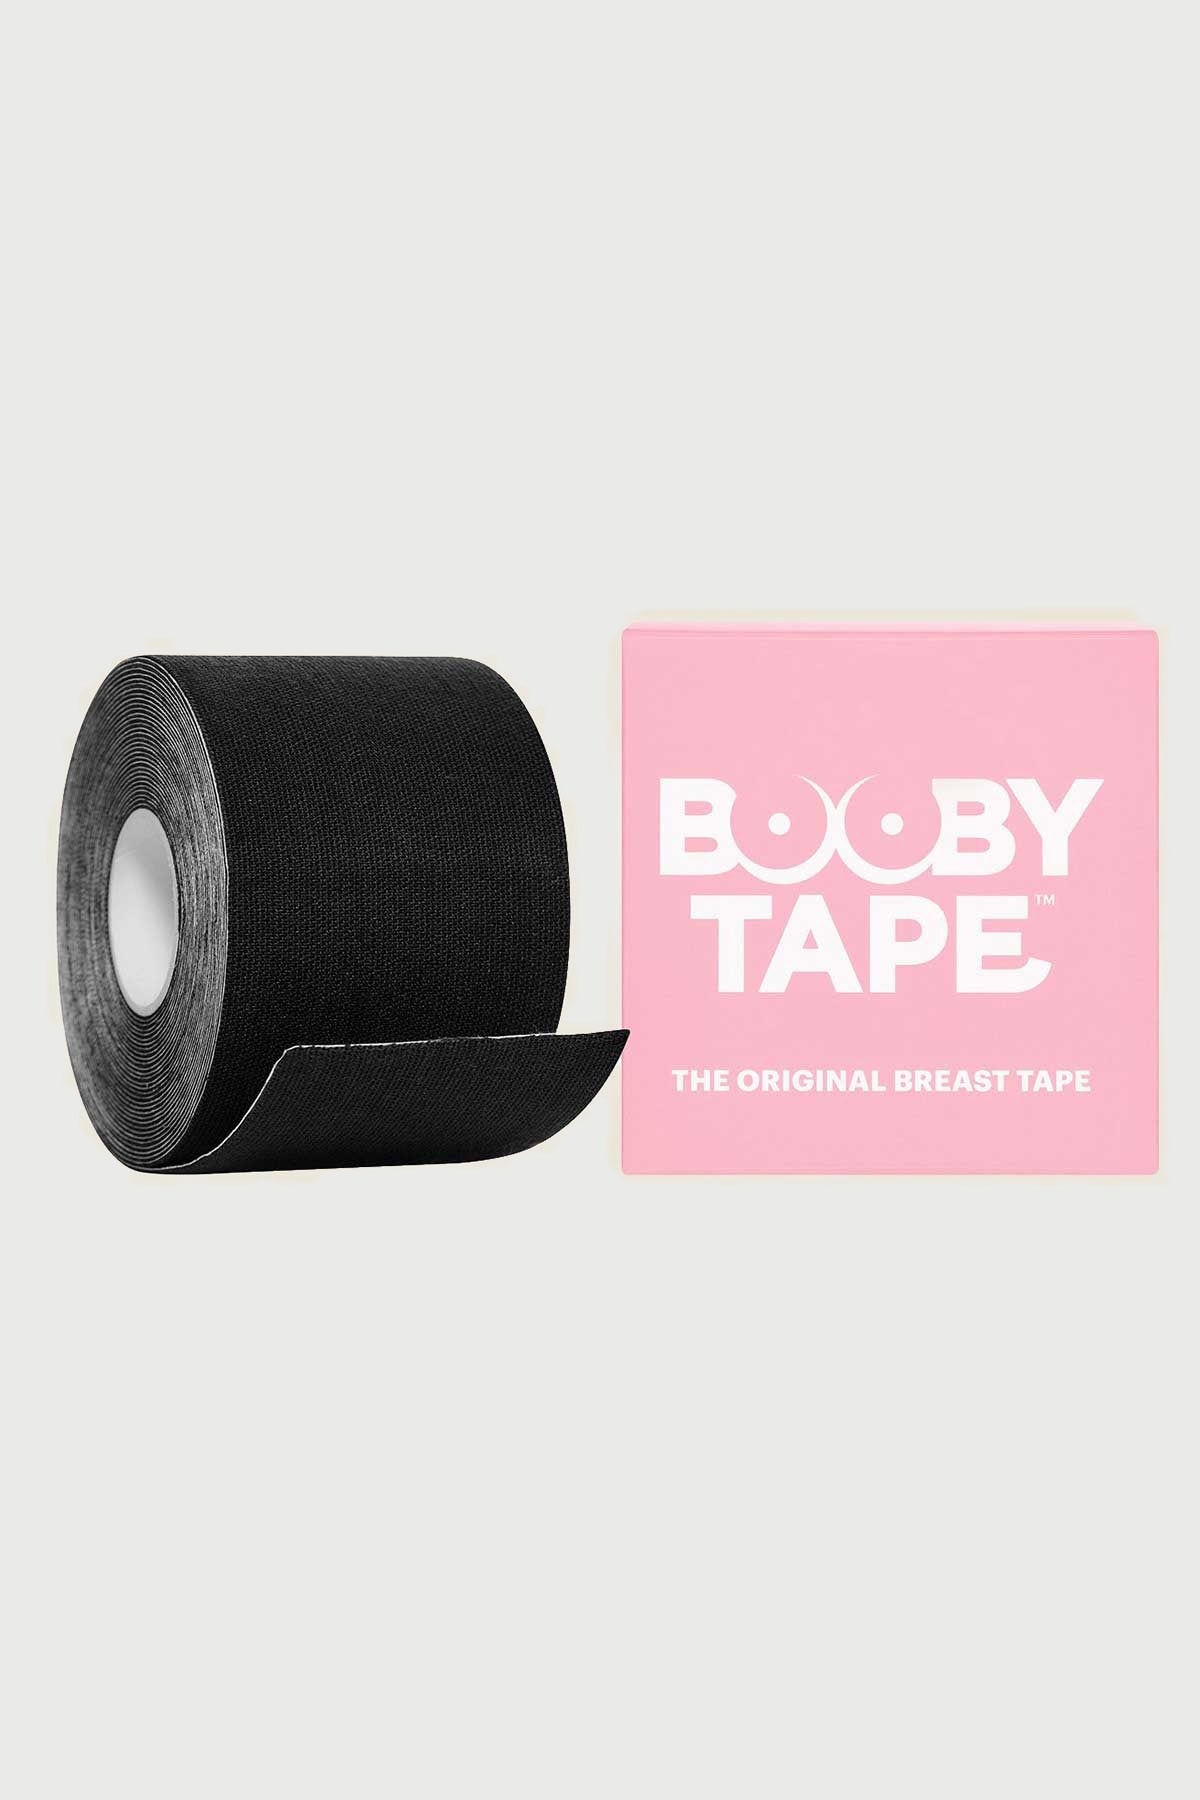 Boobytape Booby Tape Black